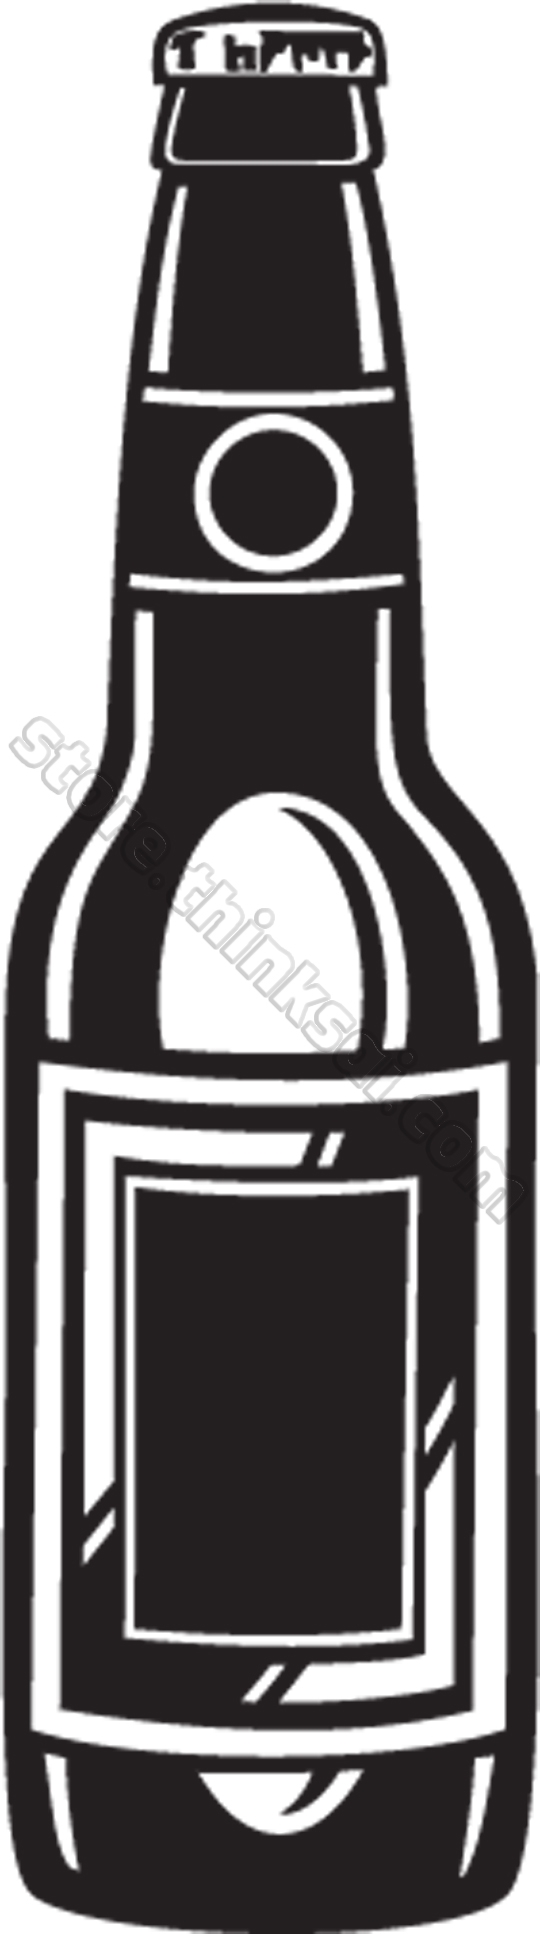 Free download clip art. Alcohol clipart bottled beer